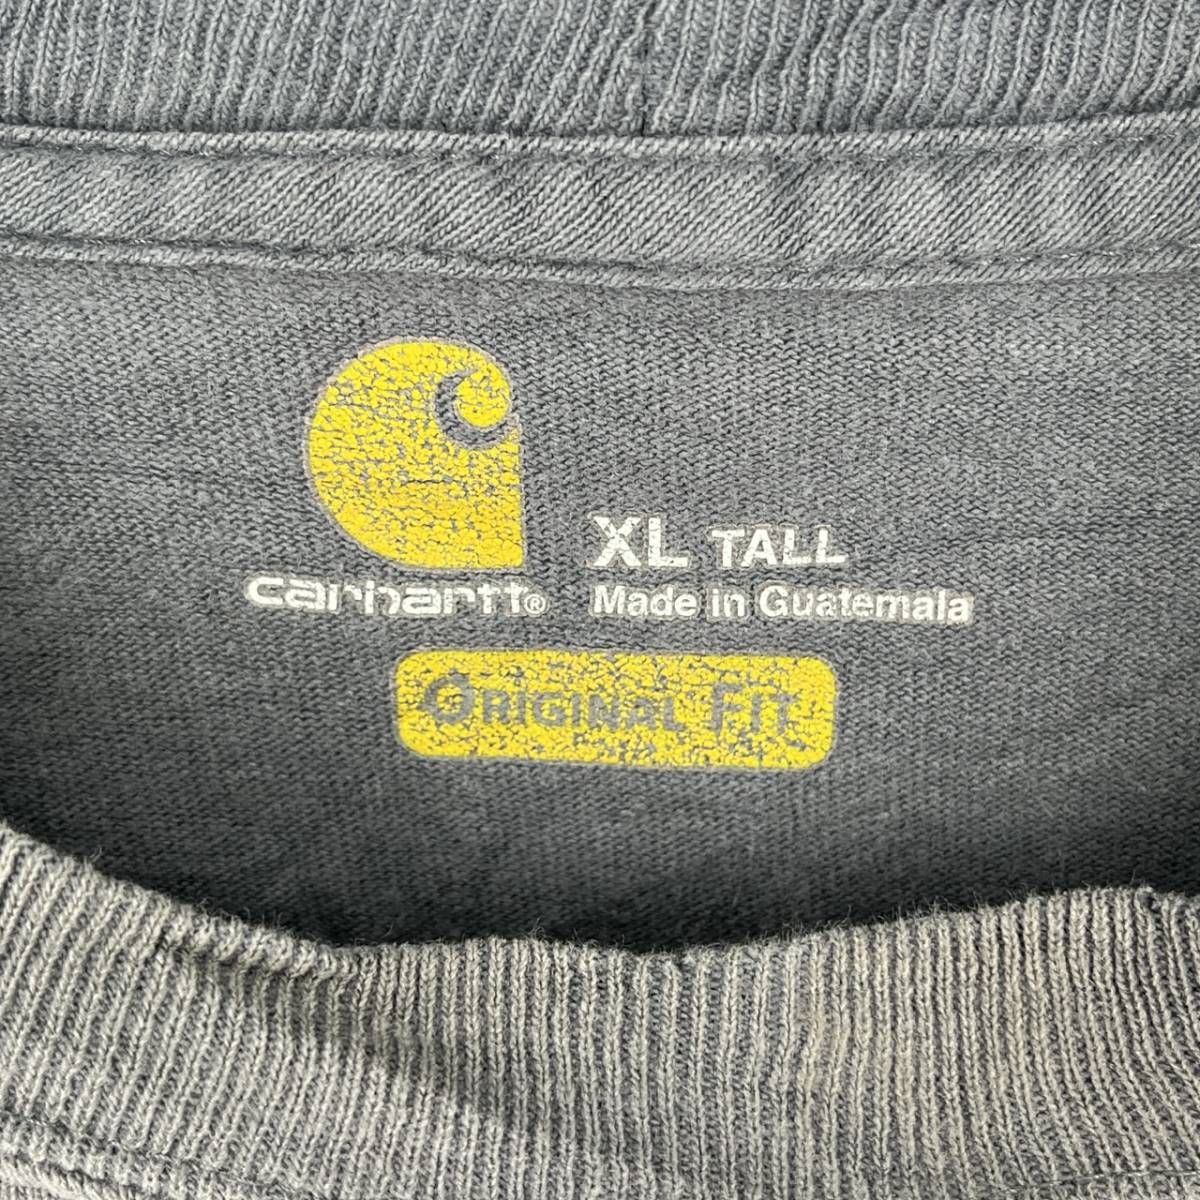 XL carhartt カーハート Tシャツ グレー 半袖 リユース ultramto ts1243_画像3